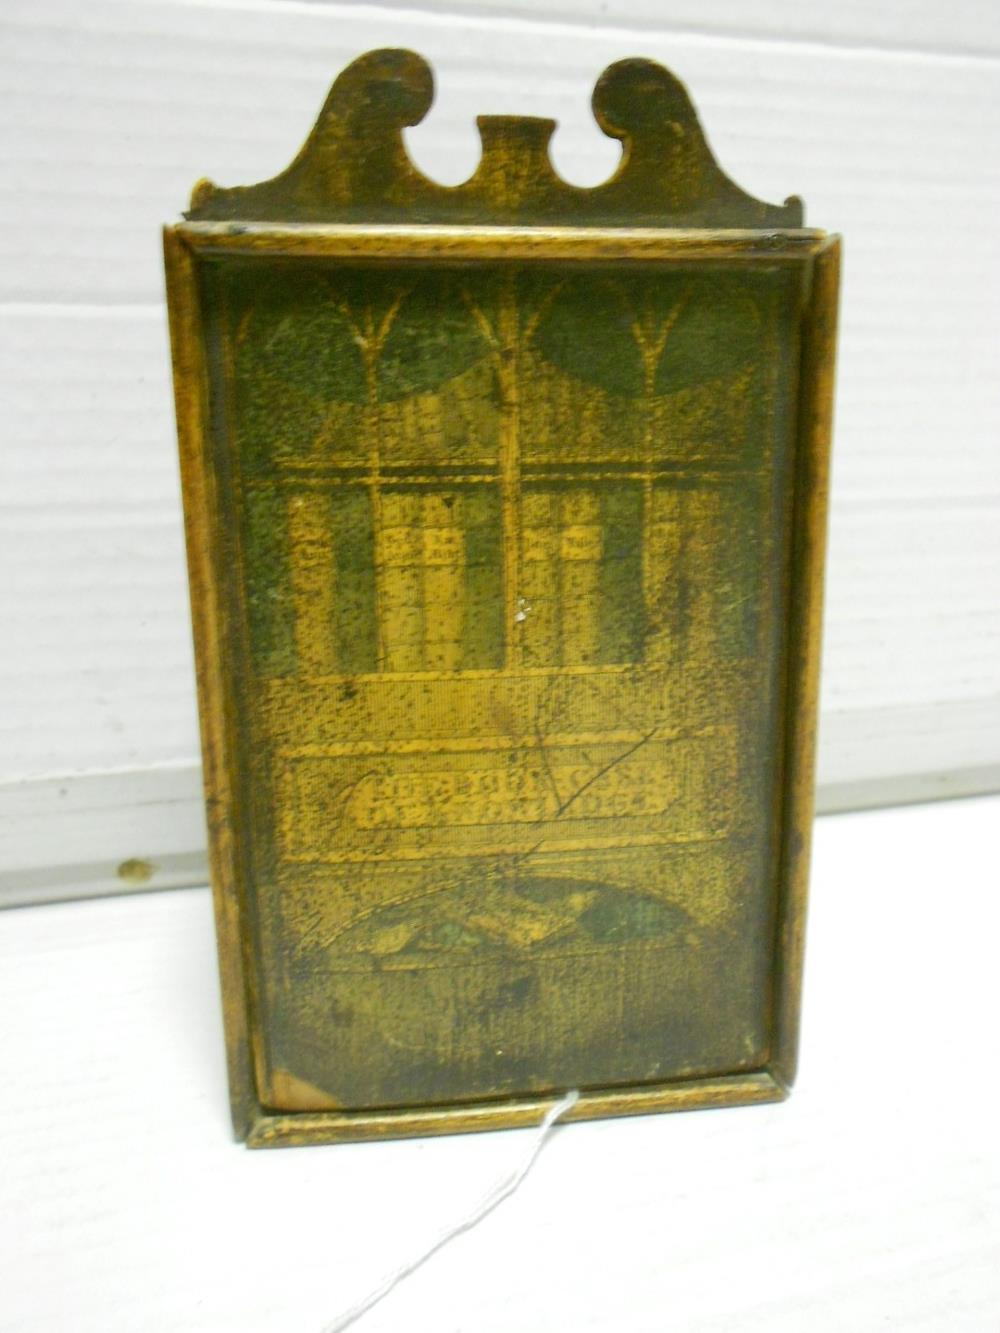 Juvenile. 'The Bookcase of Knowledge', London: for John Wallis, 1800, 16mo, 8 miniature vols (of